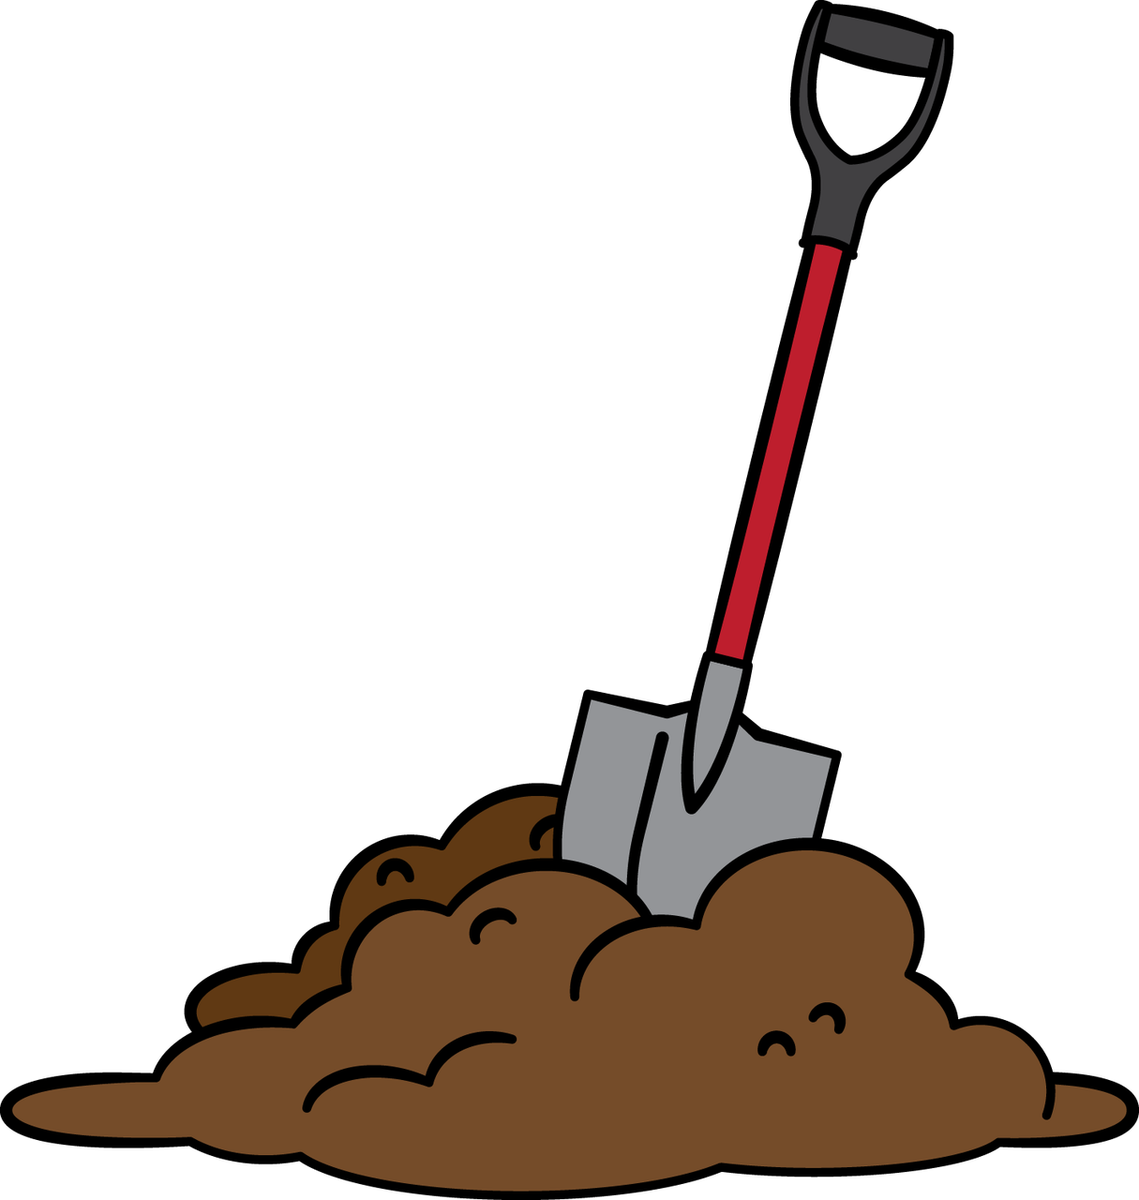  collection of shovel. Dirt clipart dirt pile